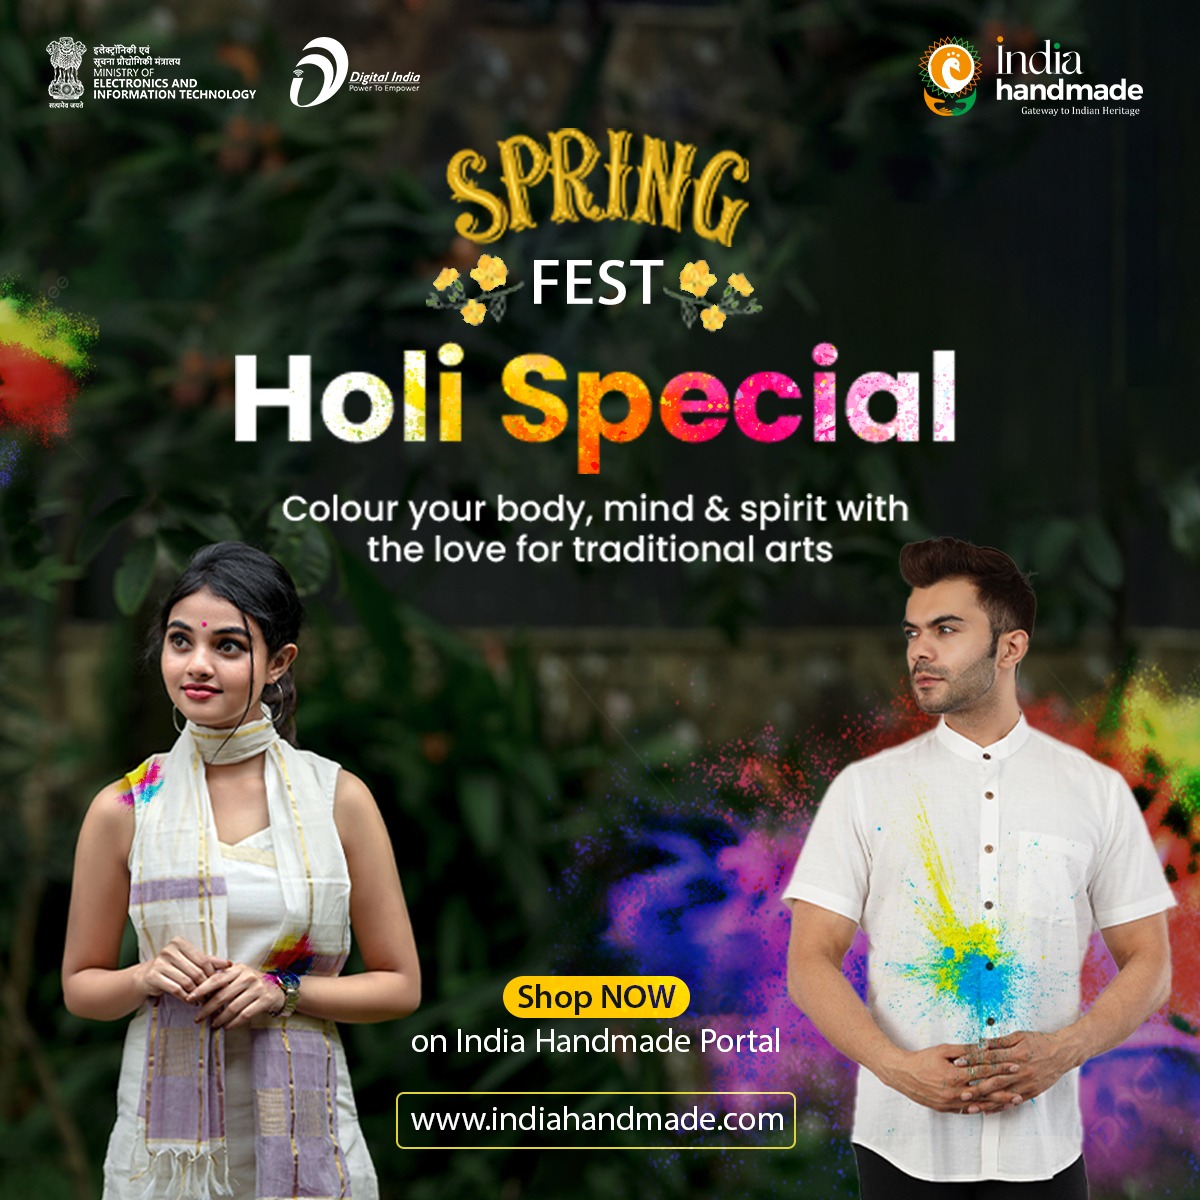 Celebrate Holi with India Handmade! Visit indiahandmade.com #DigitalIndia #VocalForLocal @Indiahandmade_ @DigitalIndiaCrp @TexMinIndia @handicraftsdc